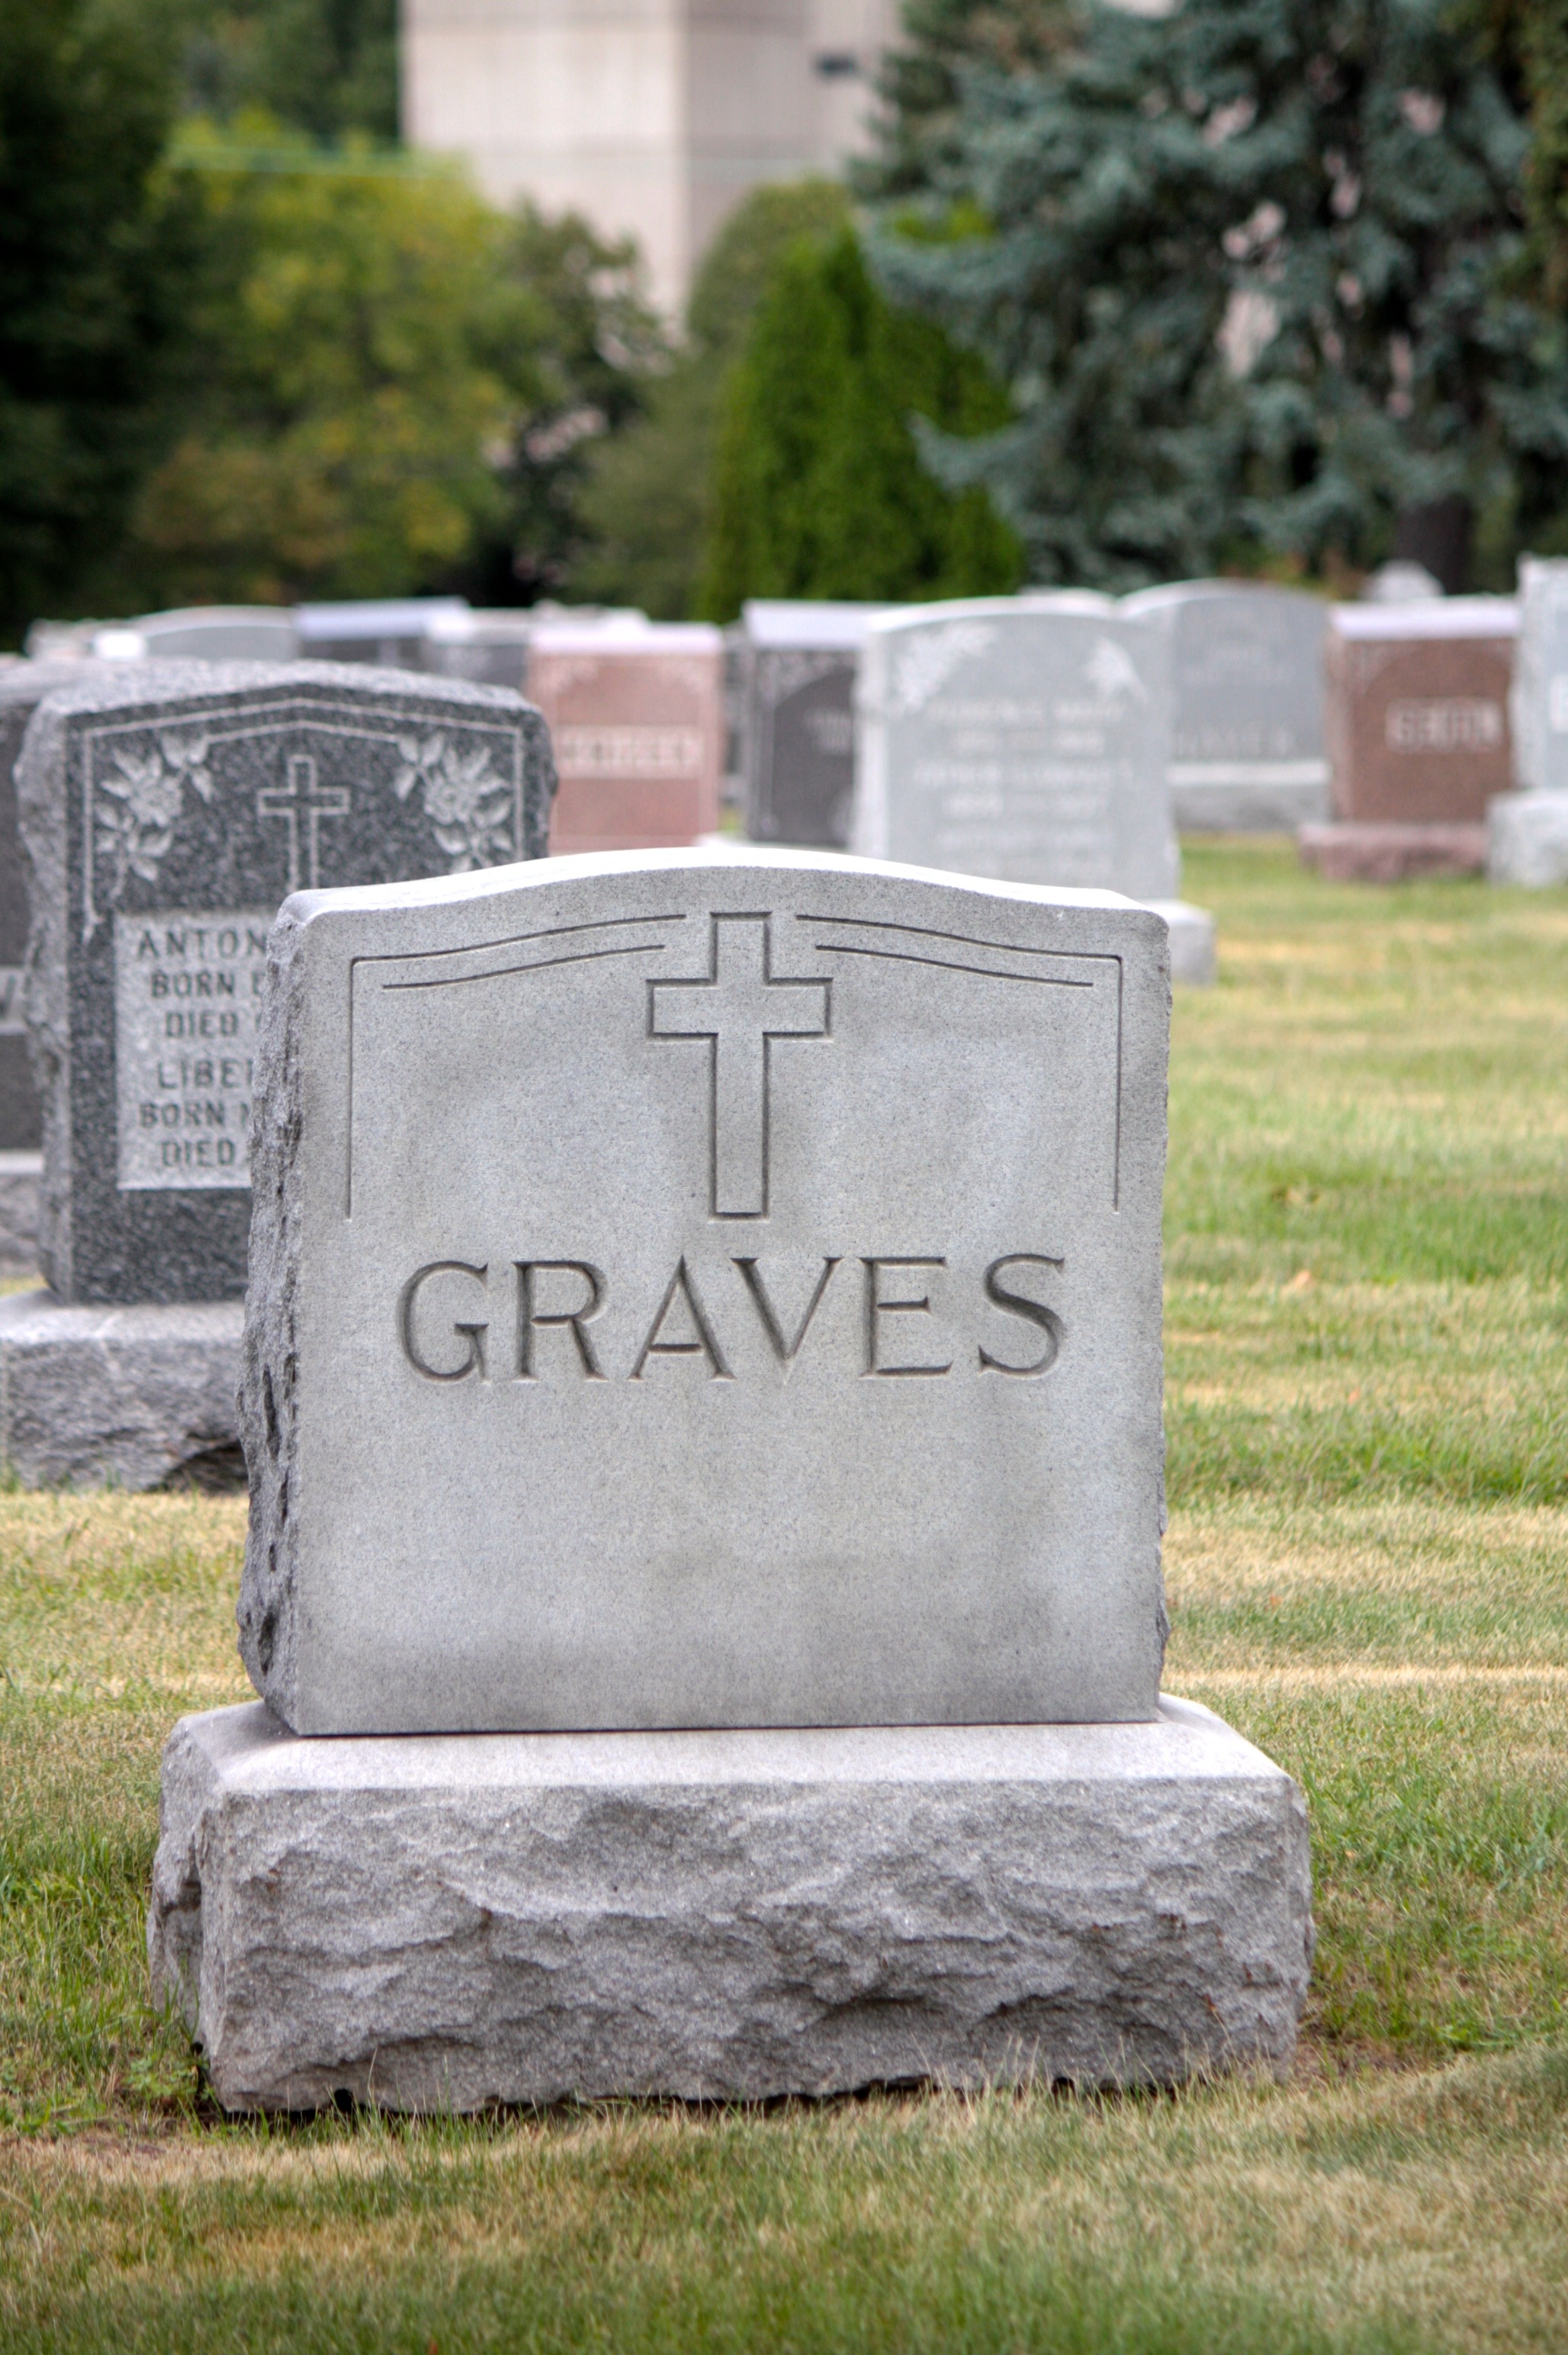 The Gravesâ€™ grave.